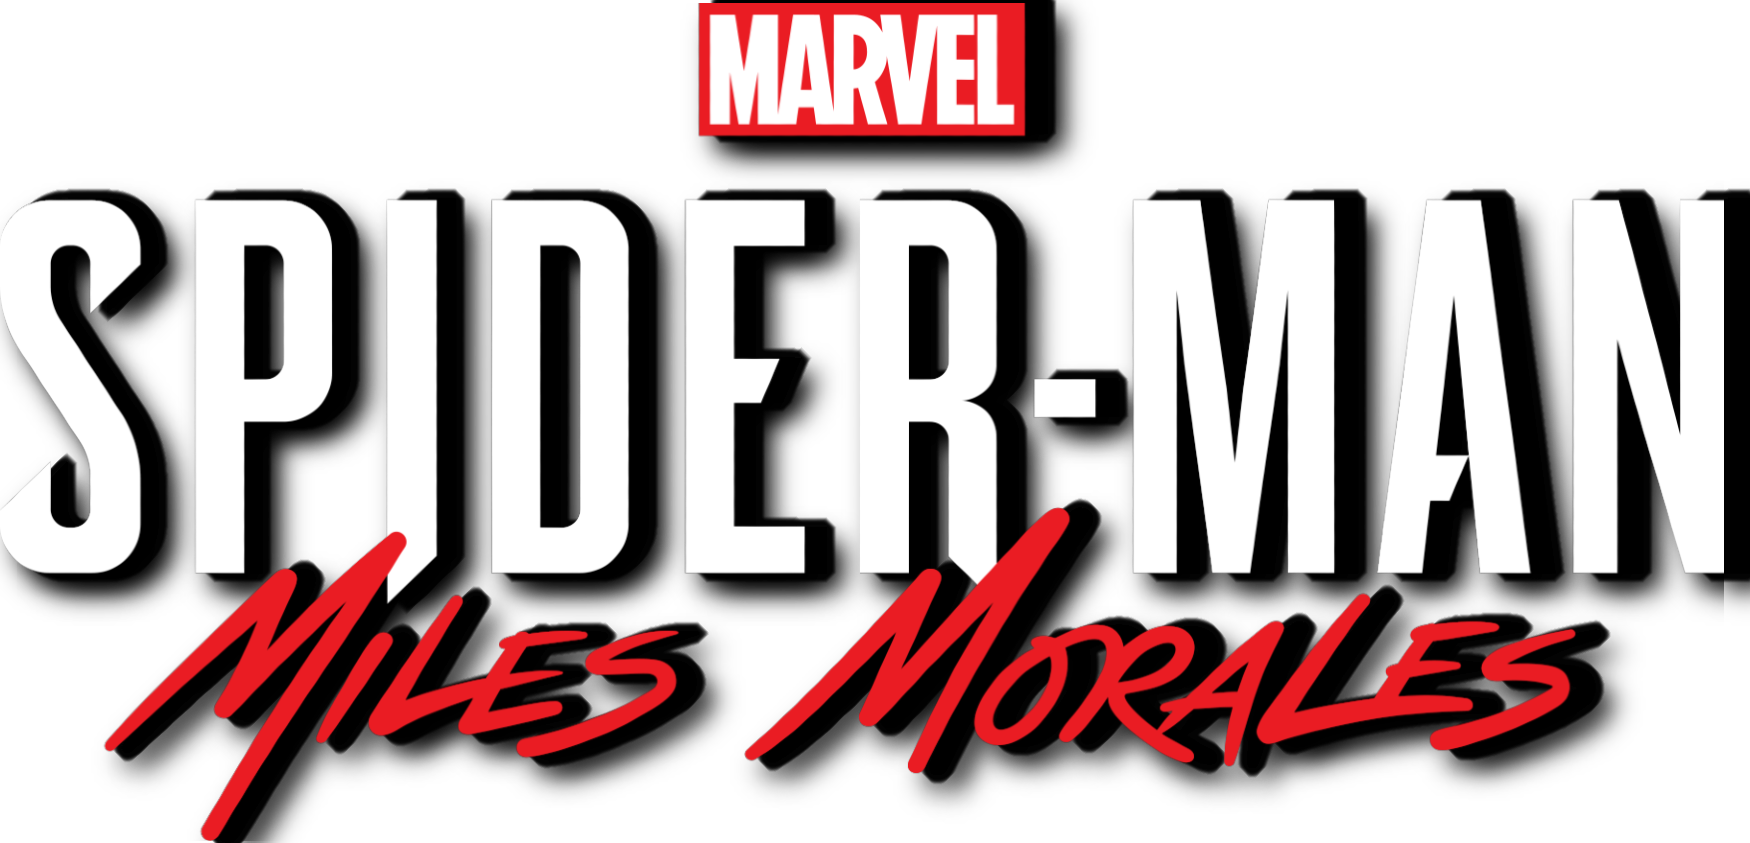 Spider-Man Miles Morales, Scarlet Spider, spiderman Back In Black, Miles  Morales, spiderman Homecoming, Spider-Man, Spiderman, Spider, marvel  Comics, T-shirt | Anyrgb